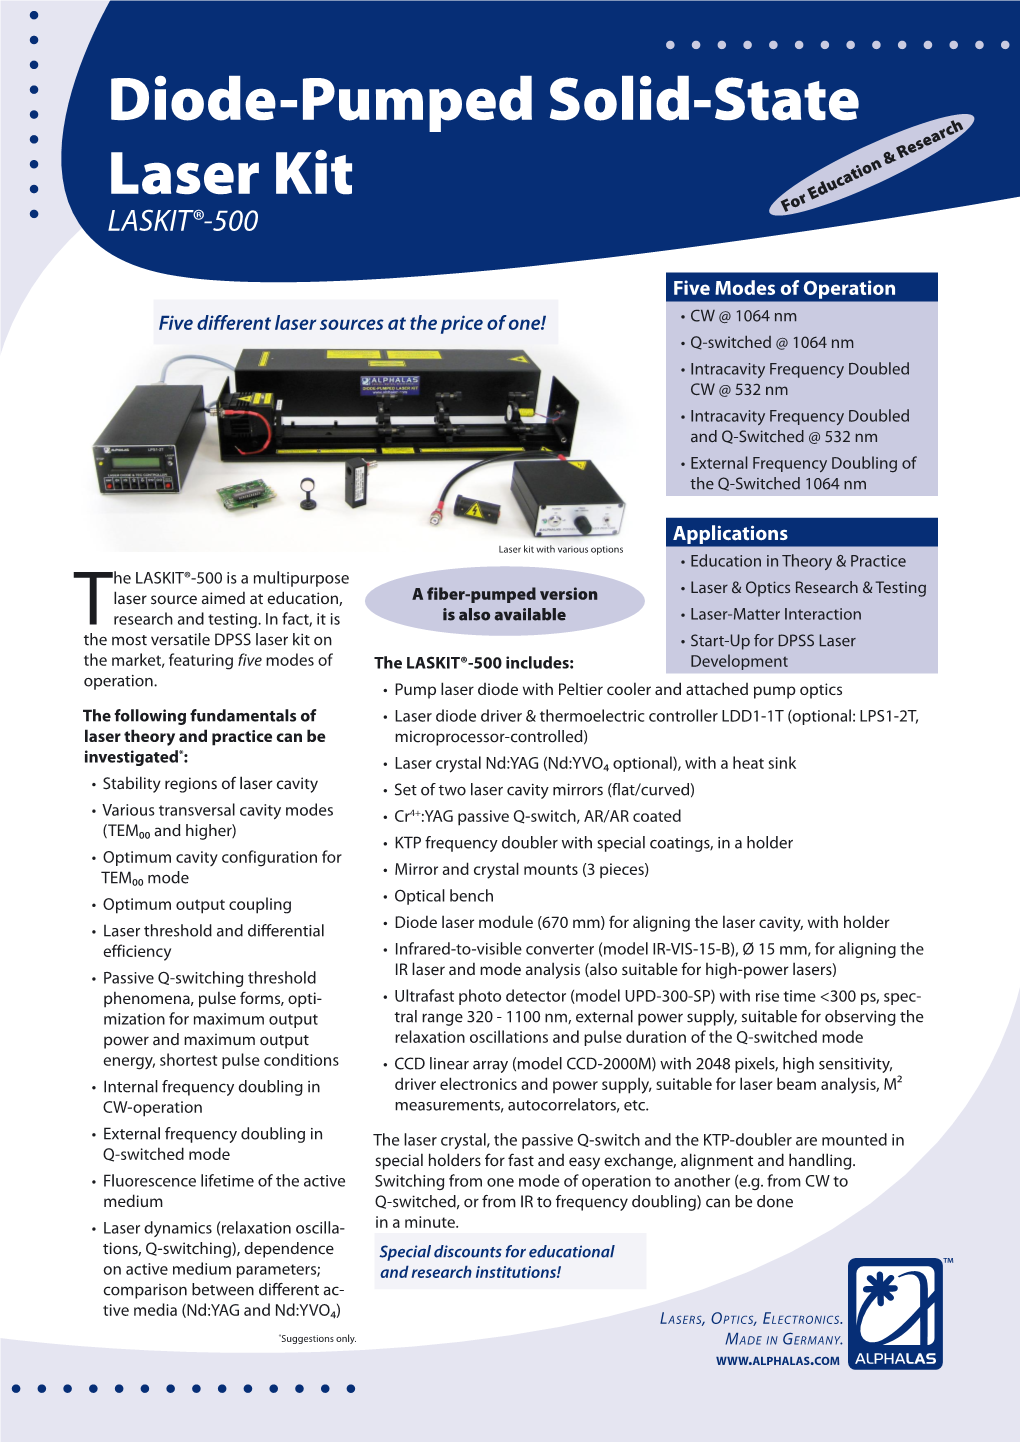 Diode-Pumped Solid-State Laser Kit: LASKIT®-500